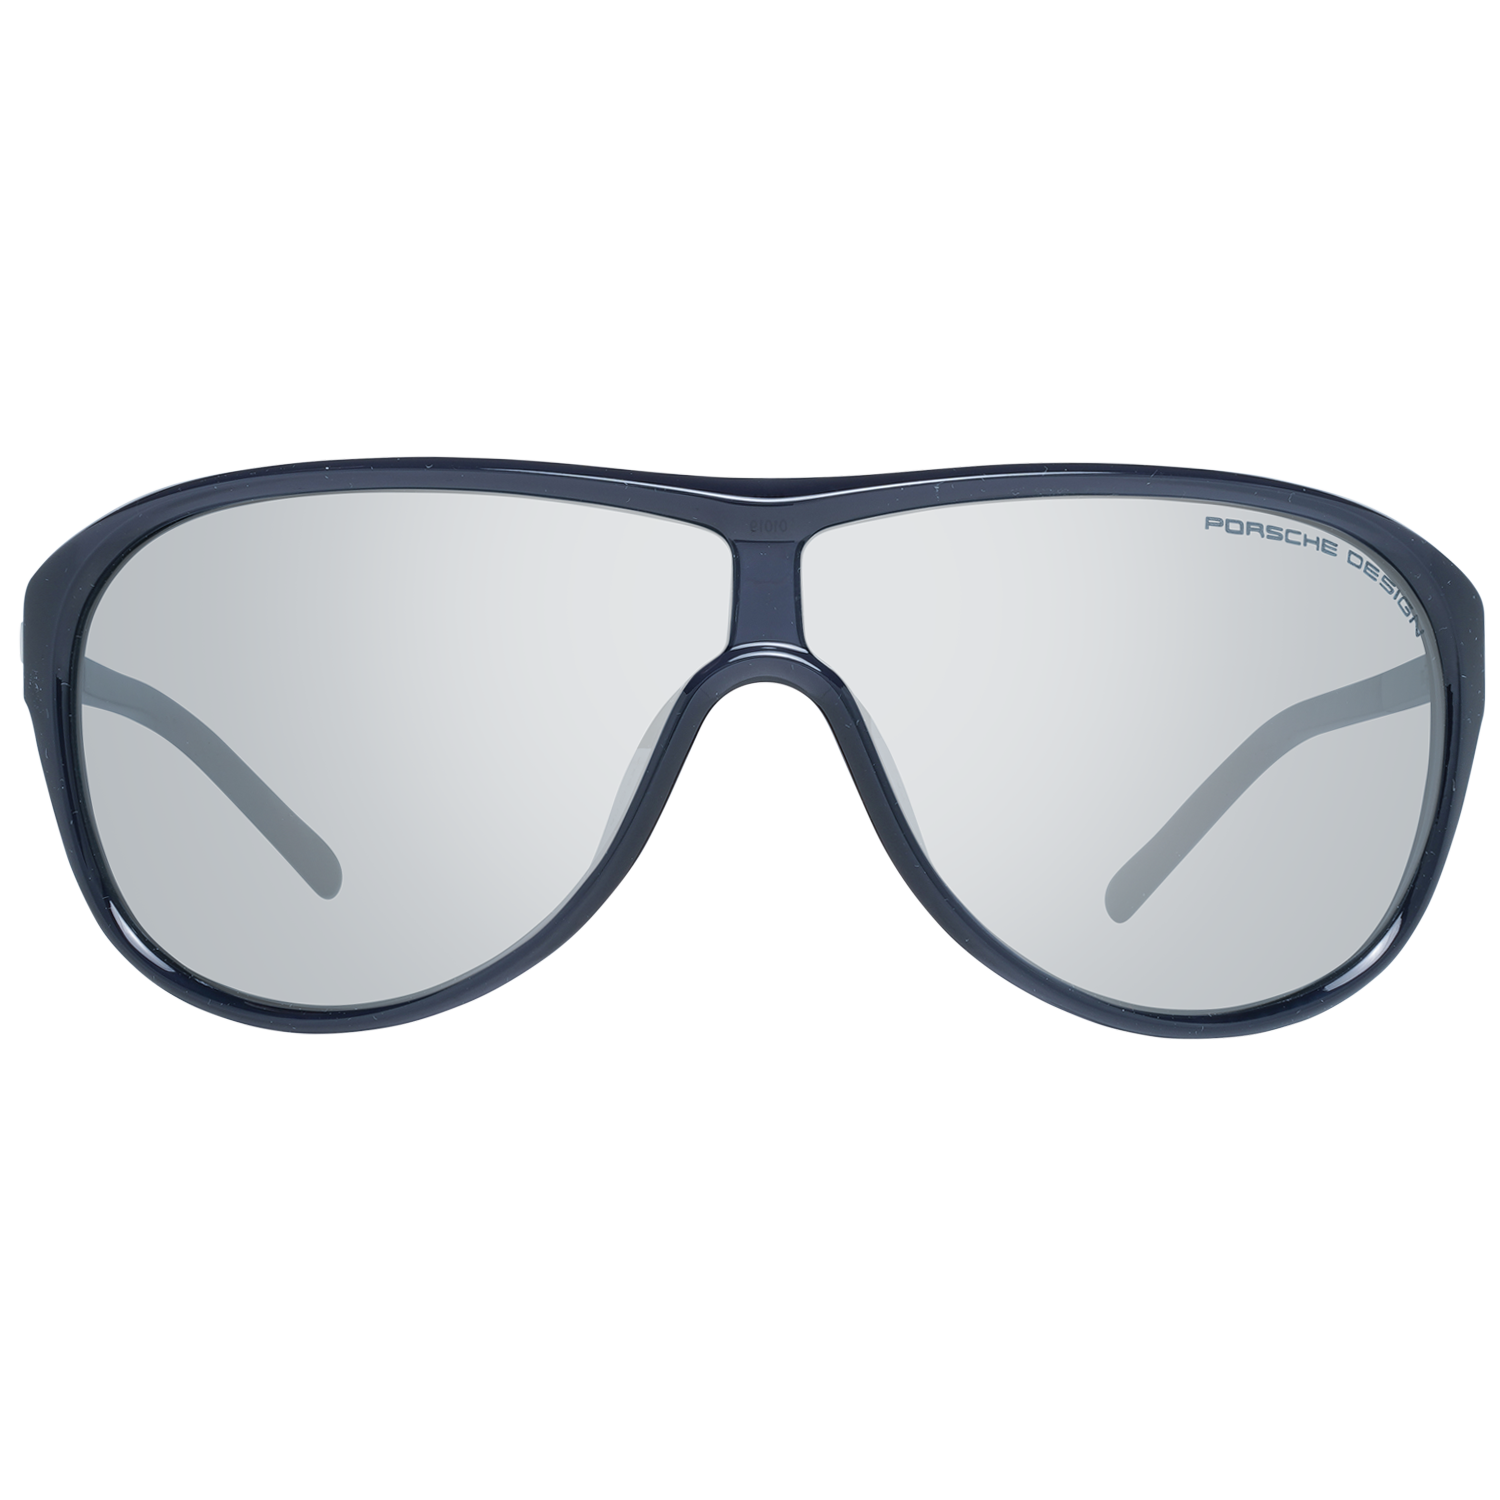 Porsche Design Sunglasses Porsche Design Sunglasses P8598 A 69 Eyeglasses Eyewear UK USA Australia 